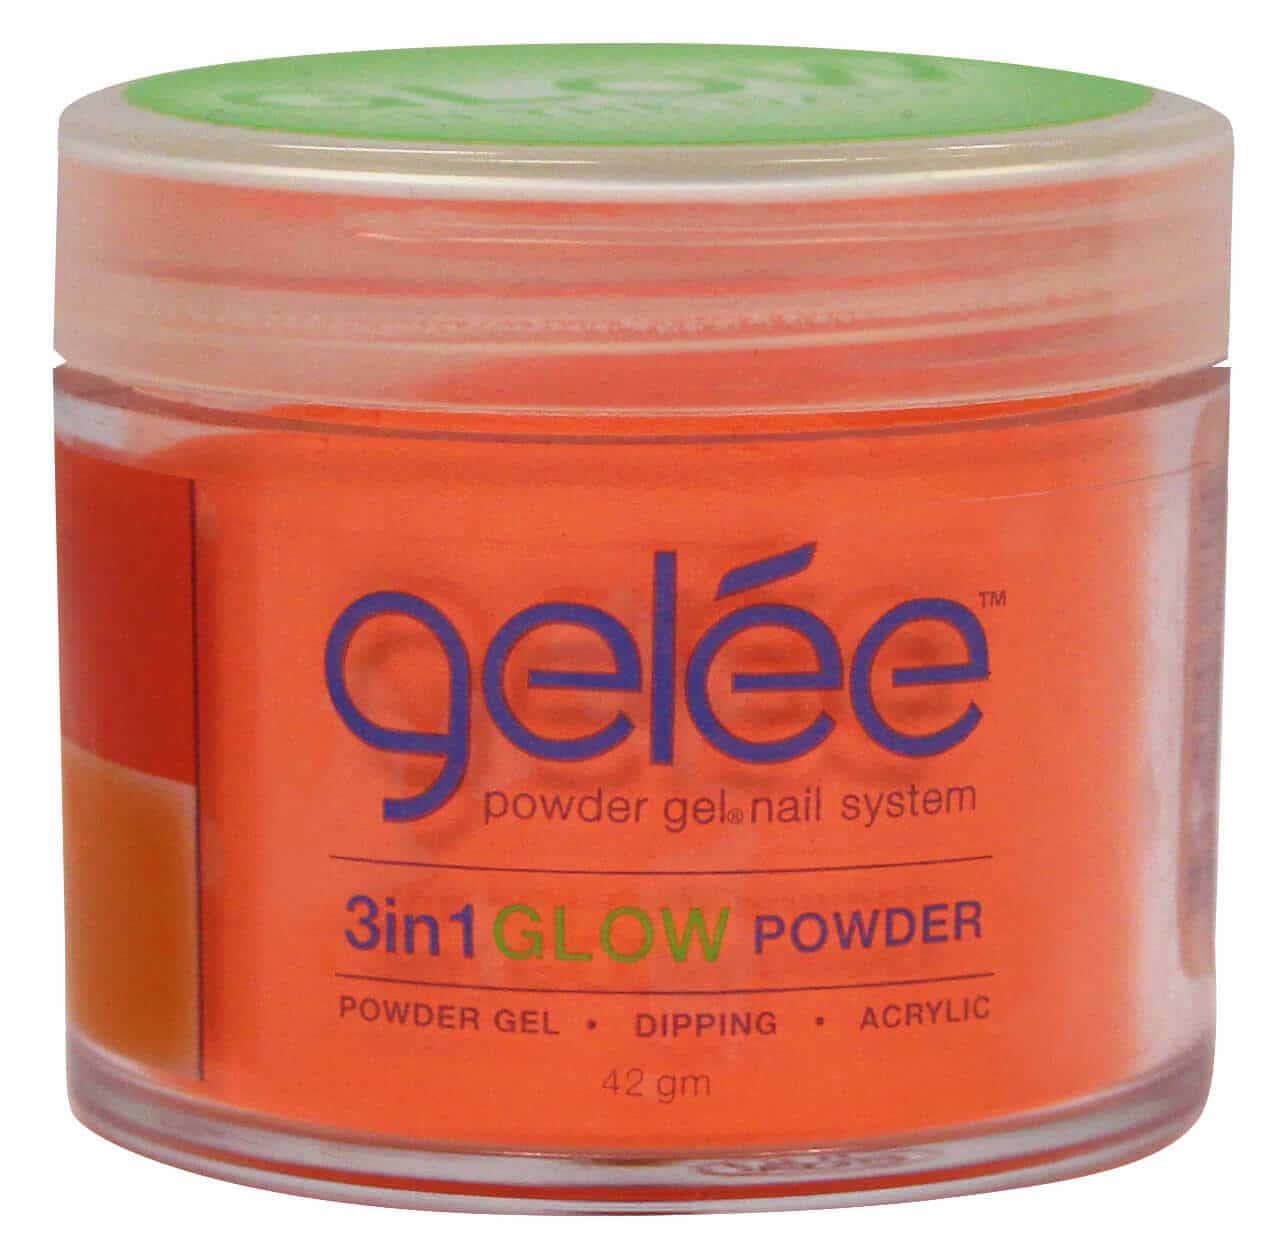 Gelee 3 in 1 Grow Powder - Ignight 1.48 oz - #GCPG01 - Premier Nail Supply 